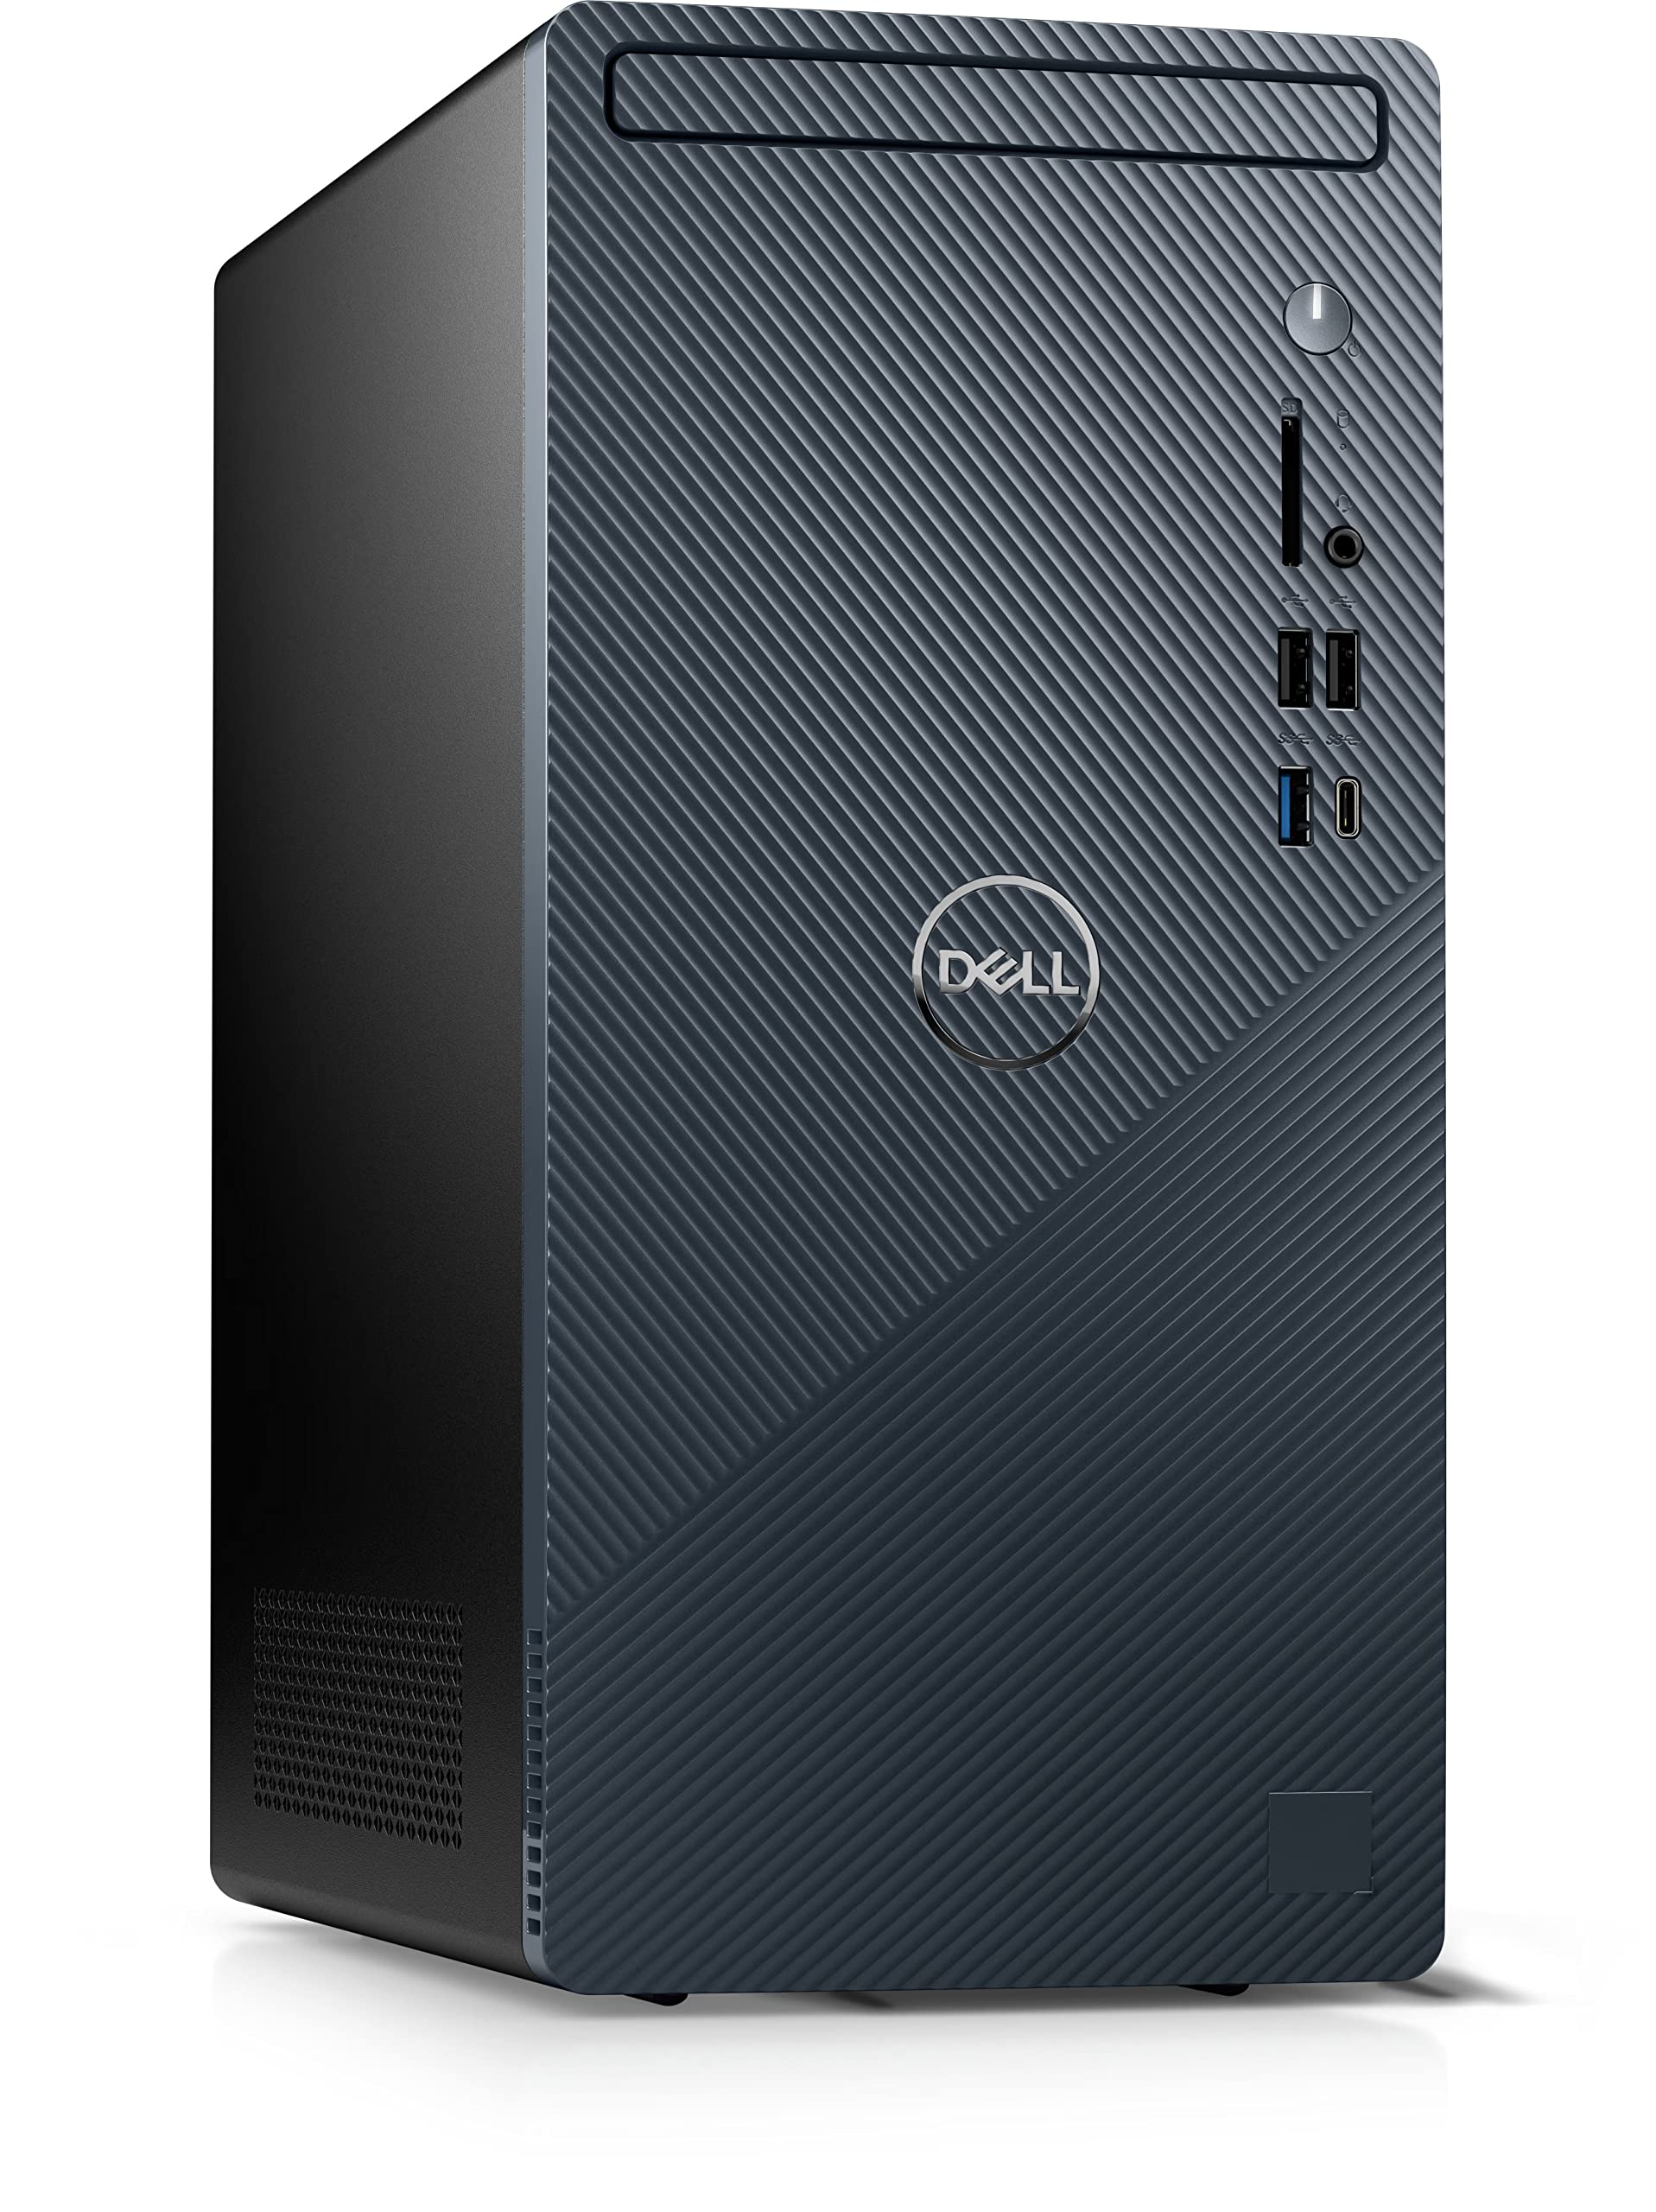 Dell Inspiron 3020 Tower Desktop Computer - 13th Gen Intel Core i5-13400 10-Core up to 4.60 GHz Processor, 32GB DDR4 RAM, 1TB NVMe SSD, Intel UHD Graphics 730, DVD+RW, Windows 11 Home